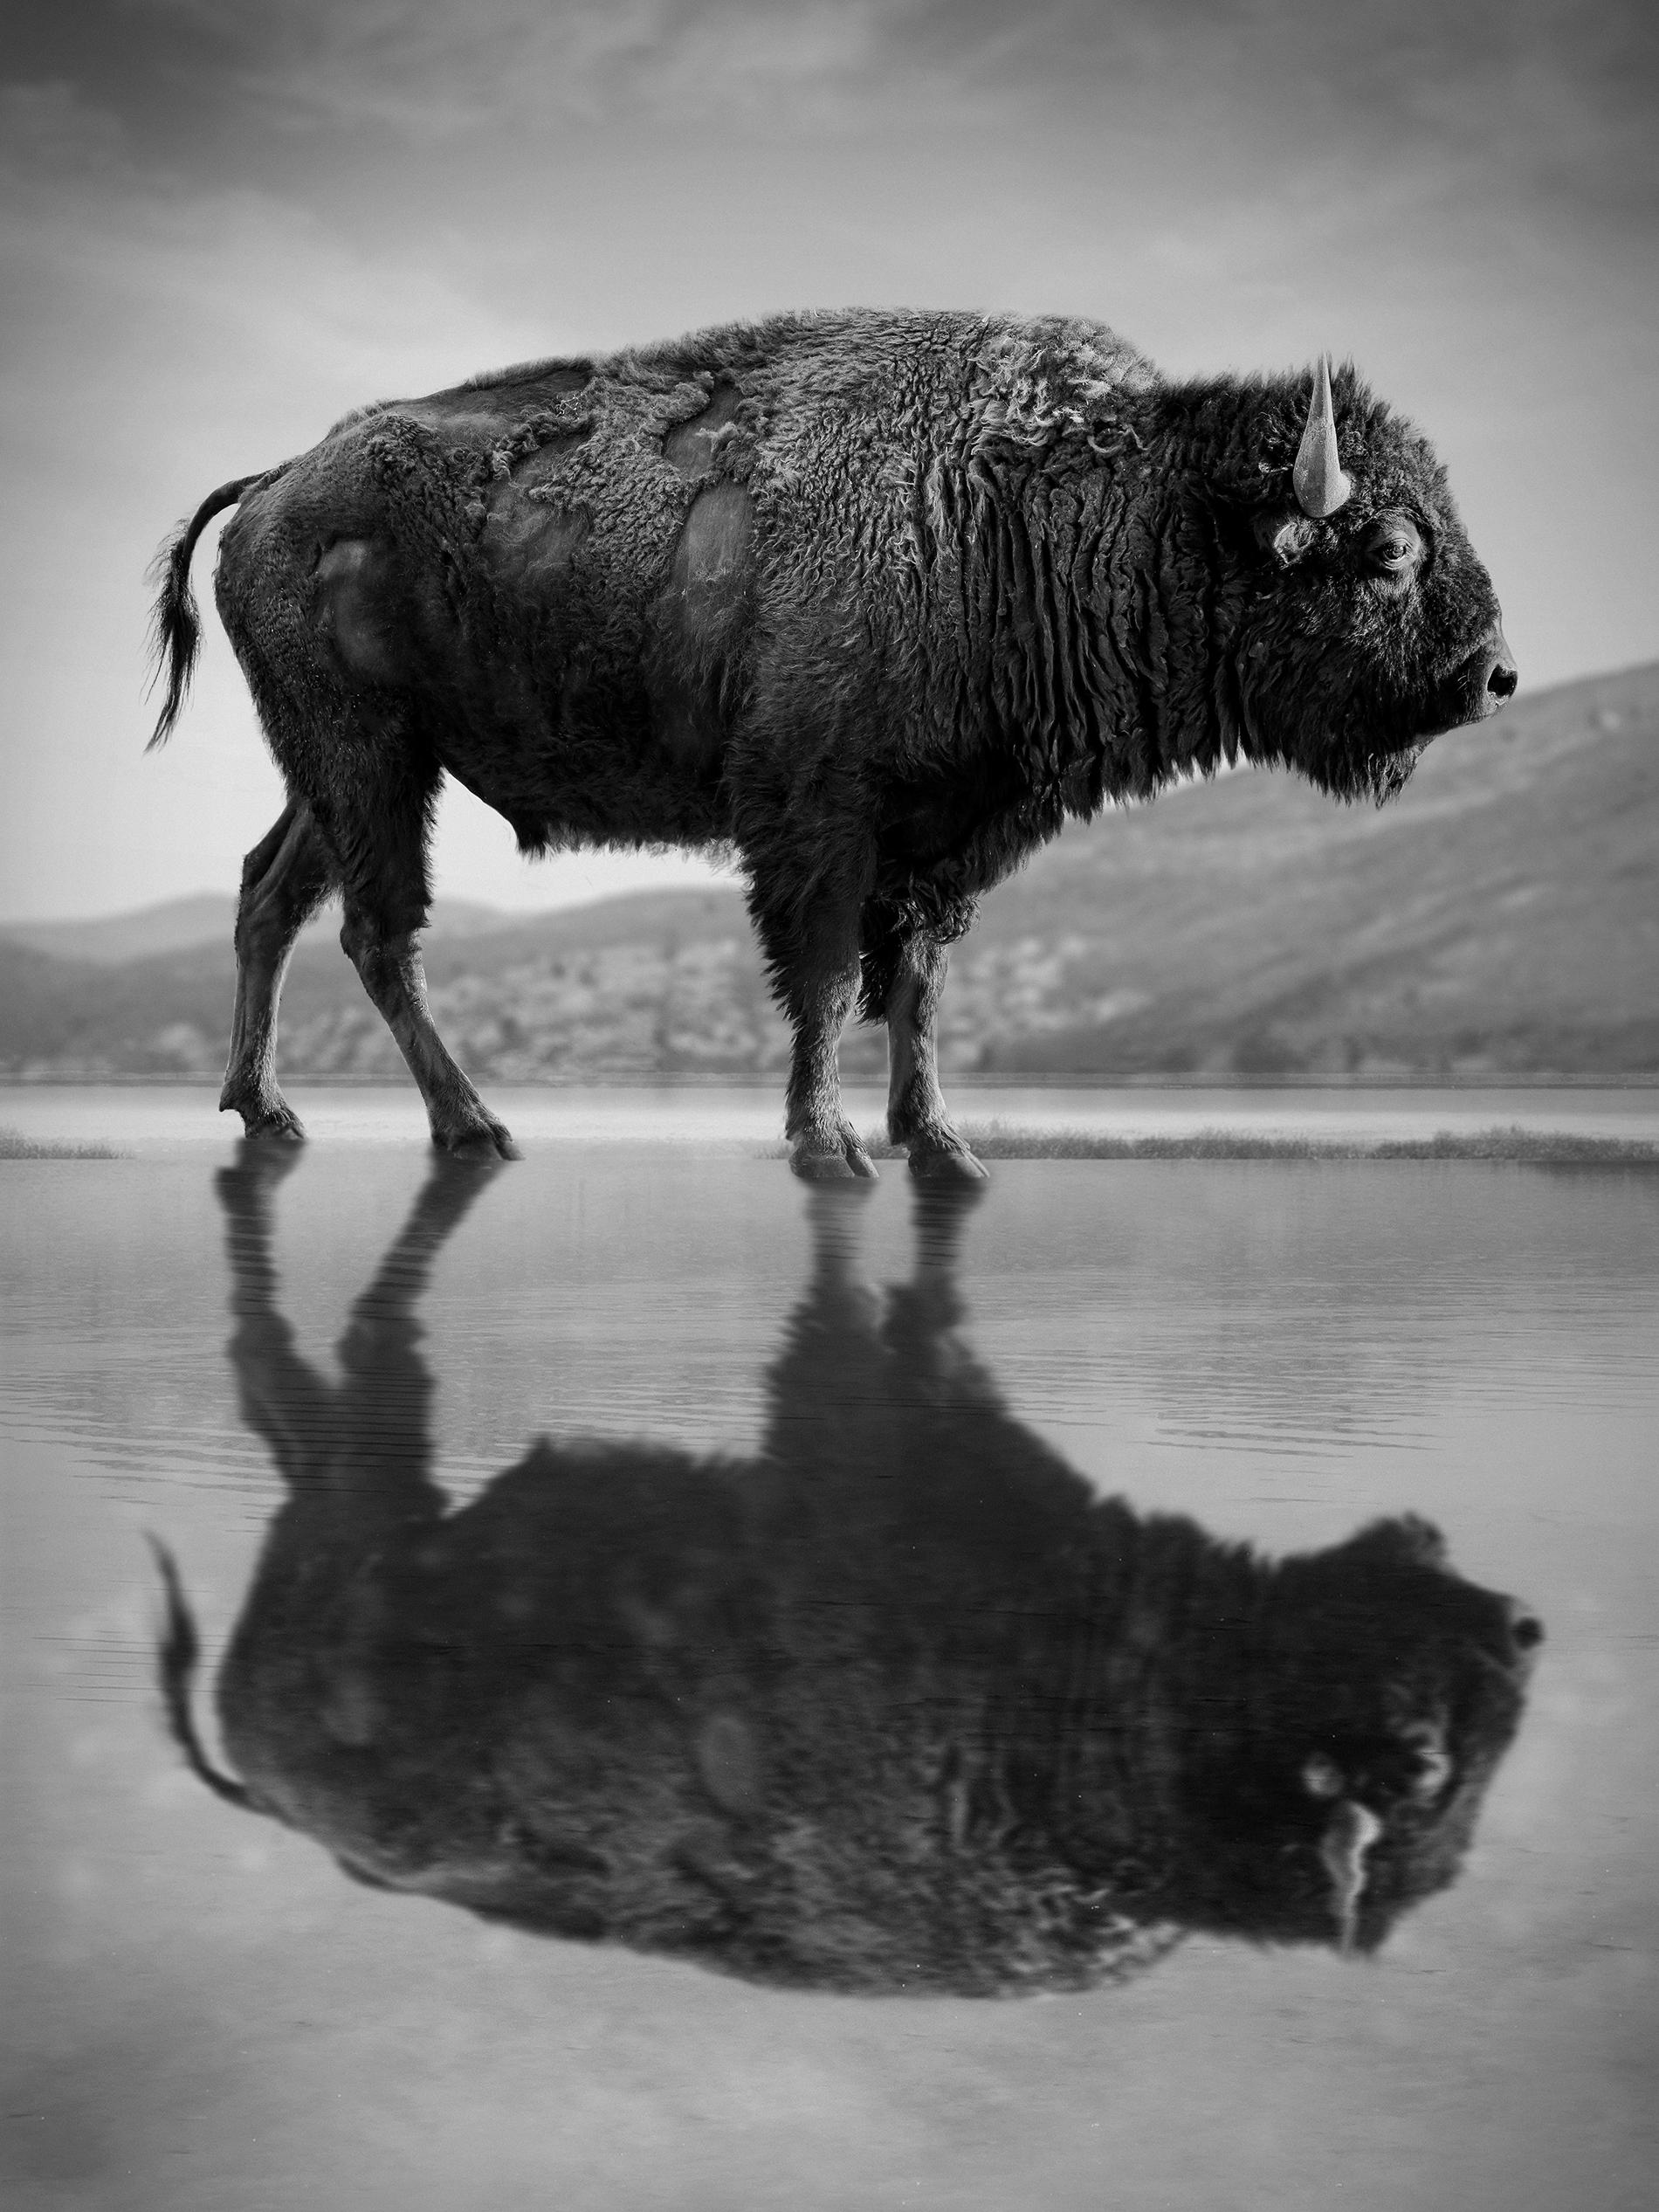 Shane Russeck Animal Print - "Old World" 40x60  Black & White Photography Bison Buffalo Fine Art Photograph